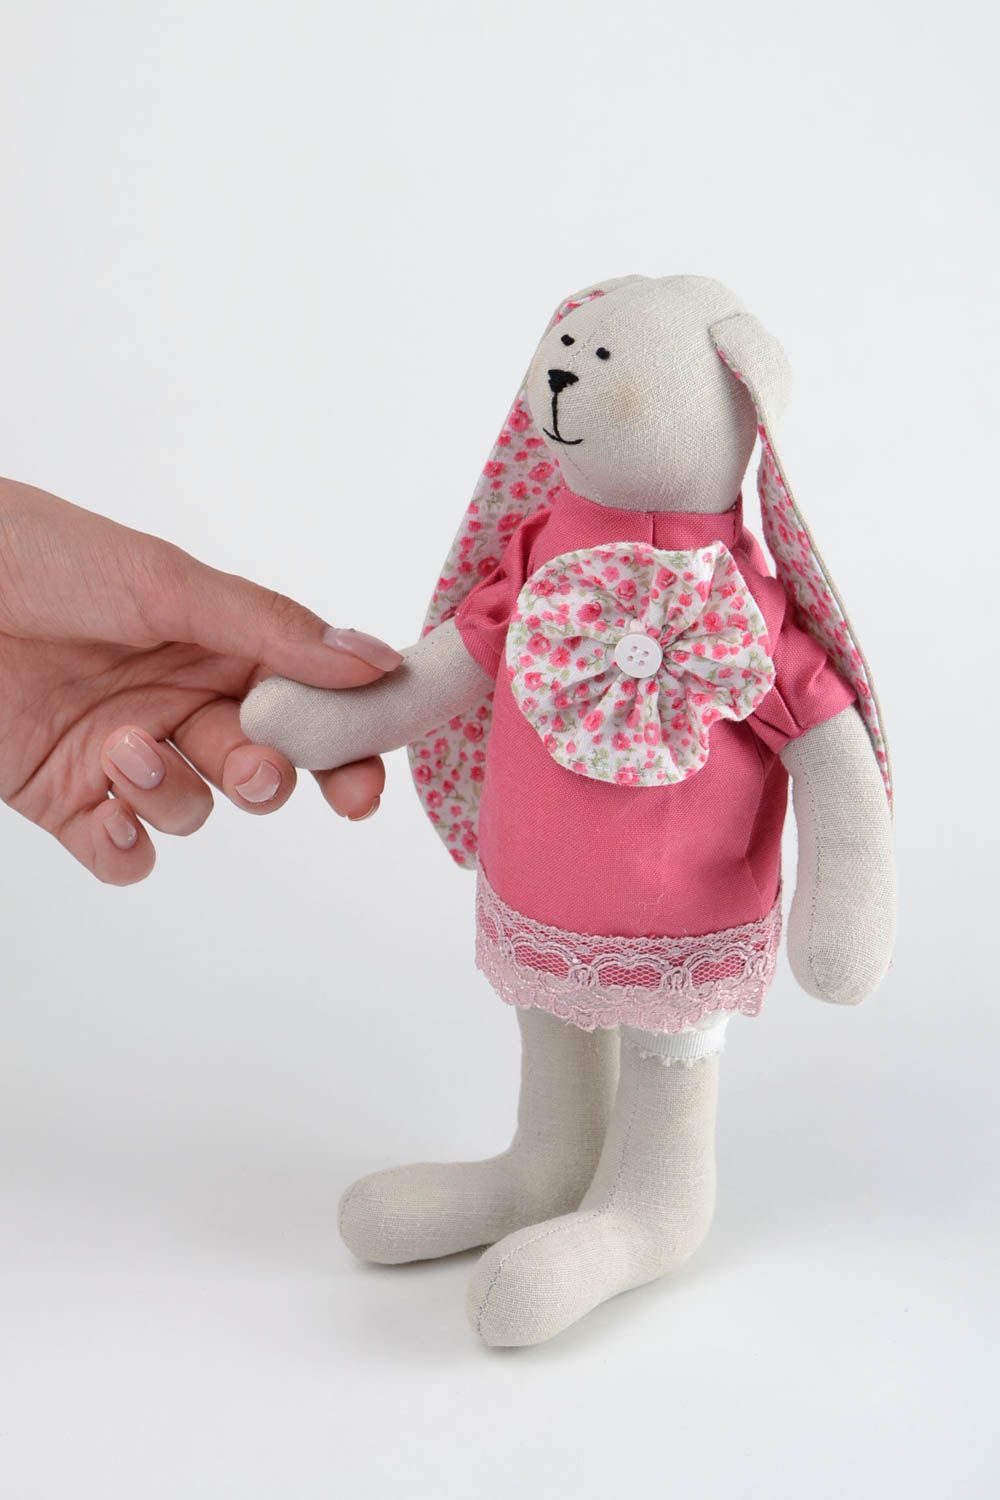 Handmade toy rabbit toy stuffed toys animal toys nursery decor gifts for kids photo 2